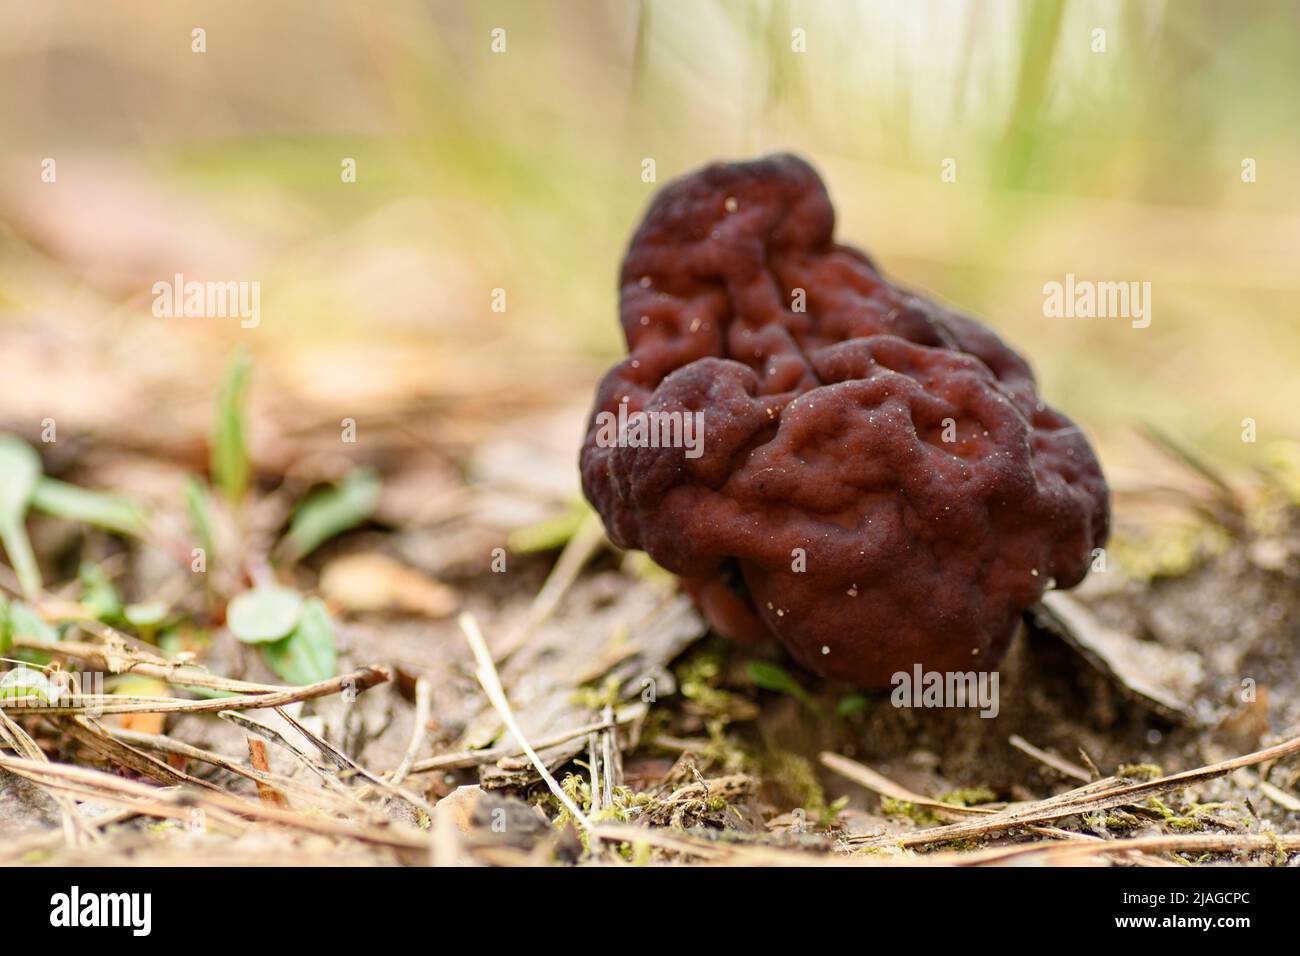 Brain mushroom (Gyromitra esculenta), also known as false morel, in grass with bright lightning. Poland Stock Photo